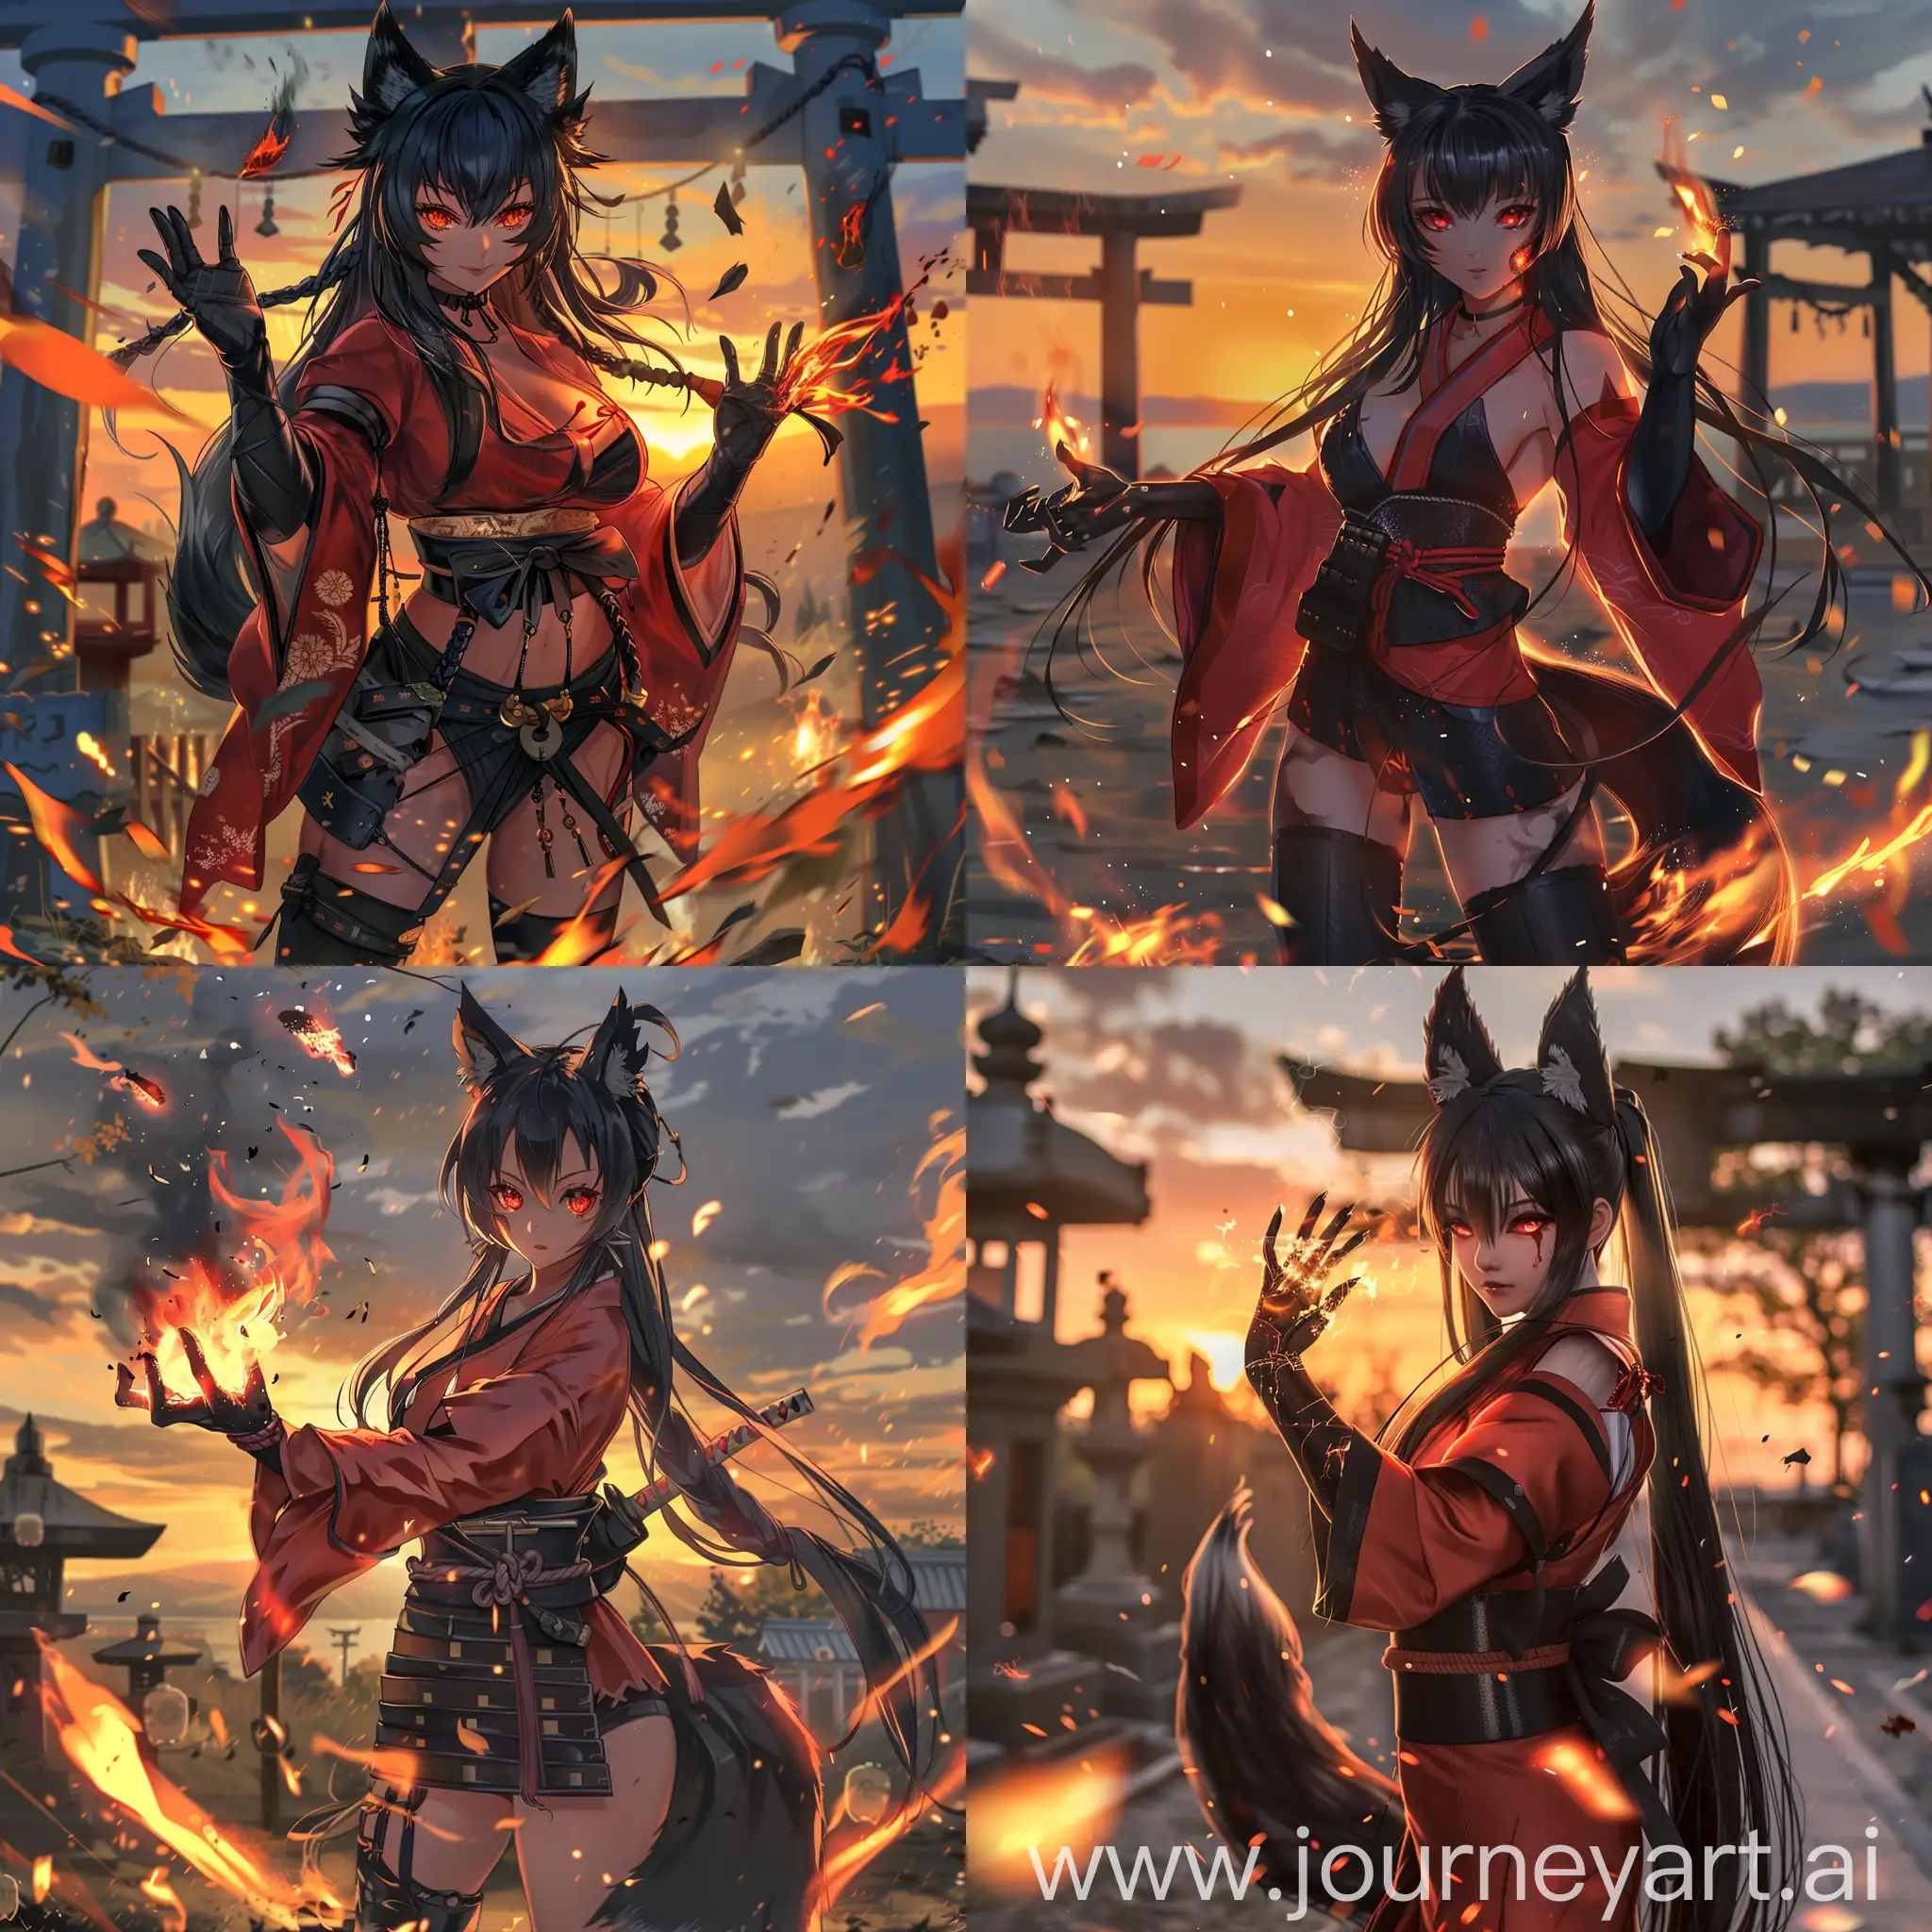 Fiery-Fox-Shrine-Priestess-Summoning-Flames-at-Sunset